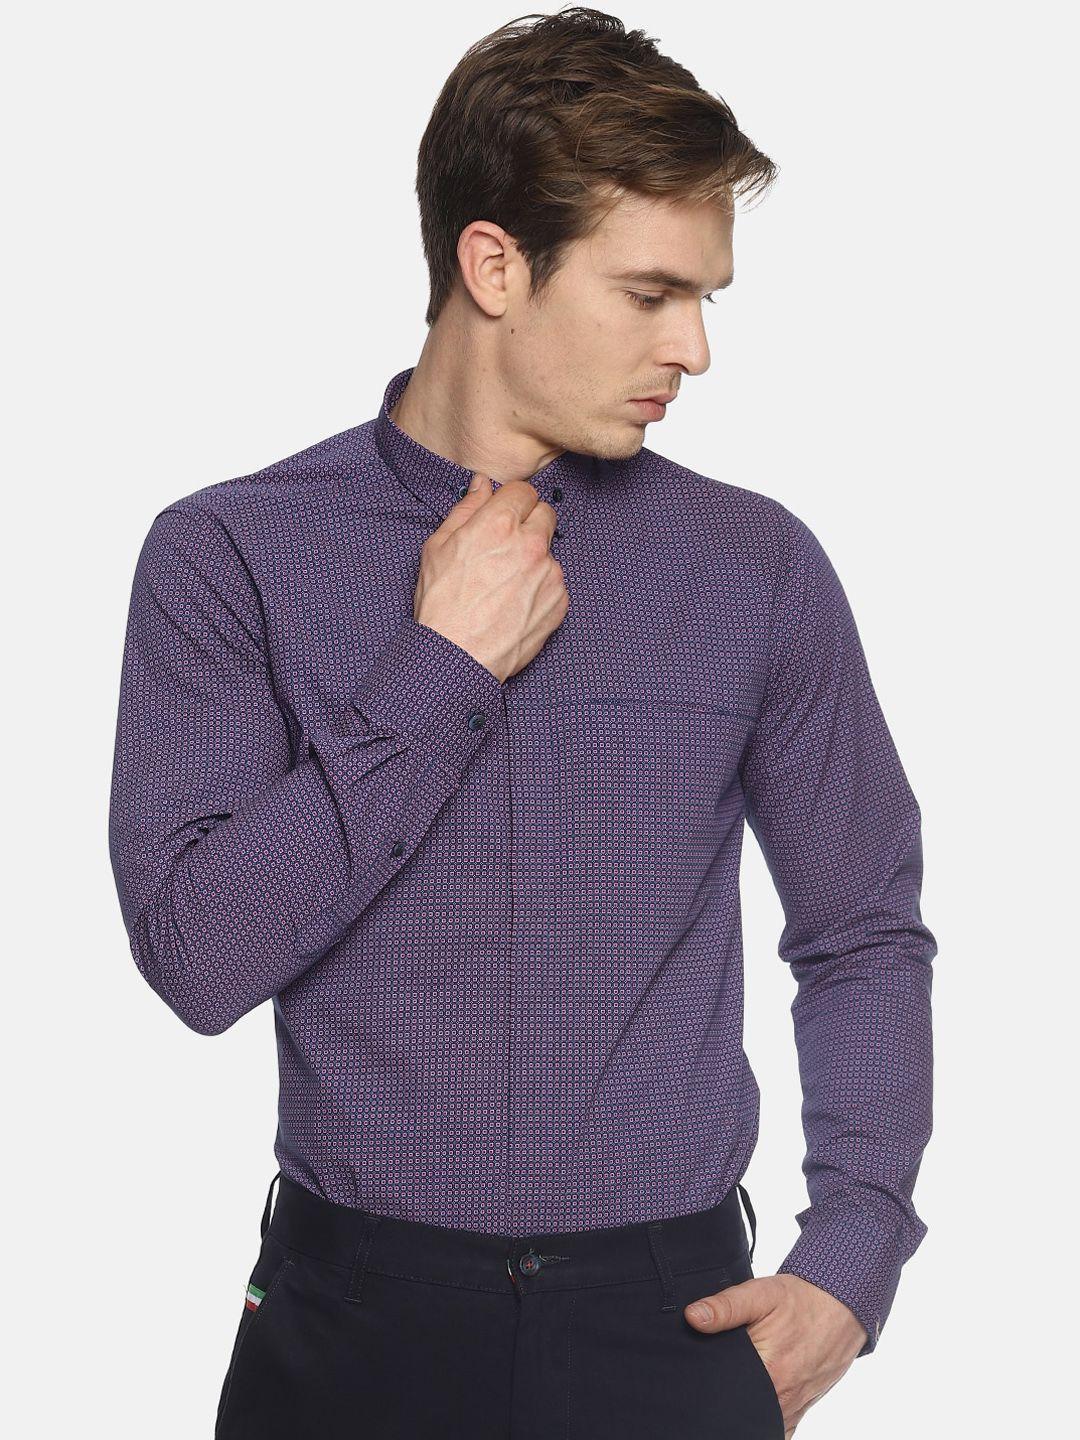 couper-&-coll-men-purple-checked-casual-shirt